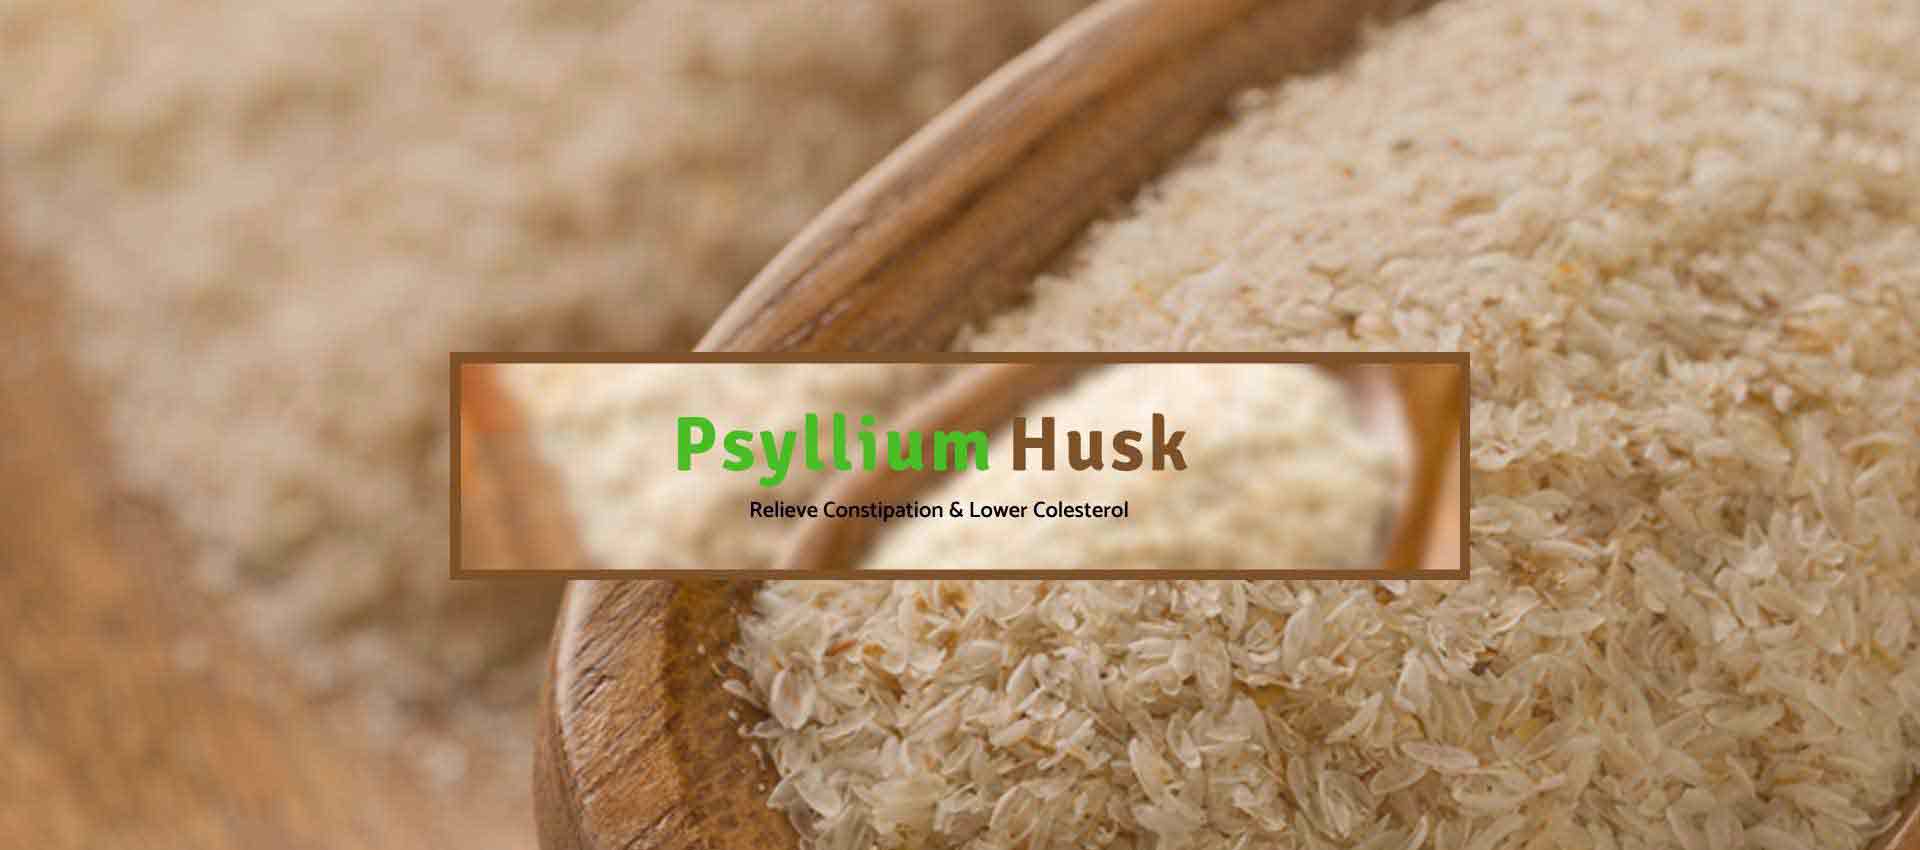 Psyllium Husk Manufacturers in Japan